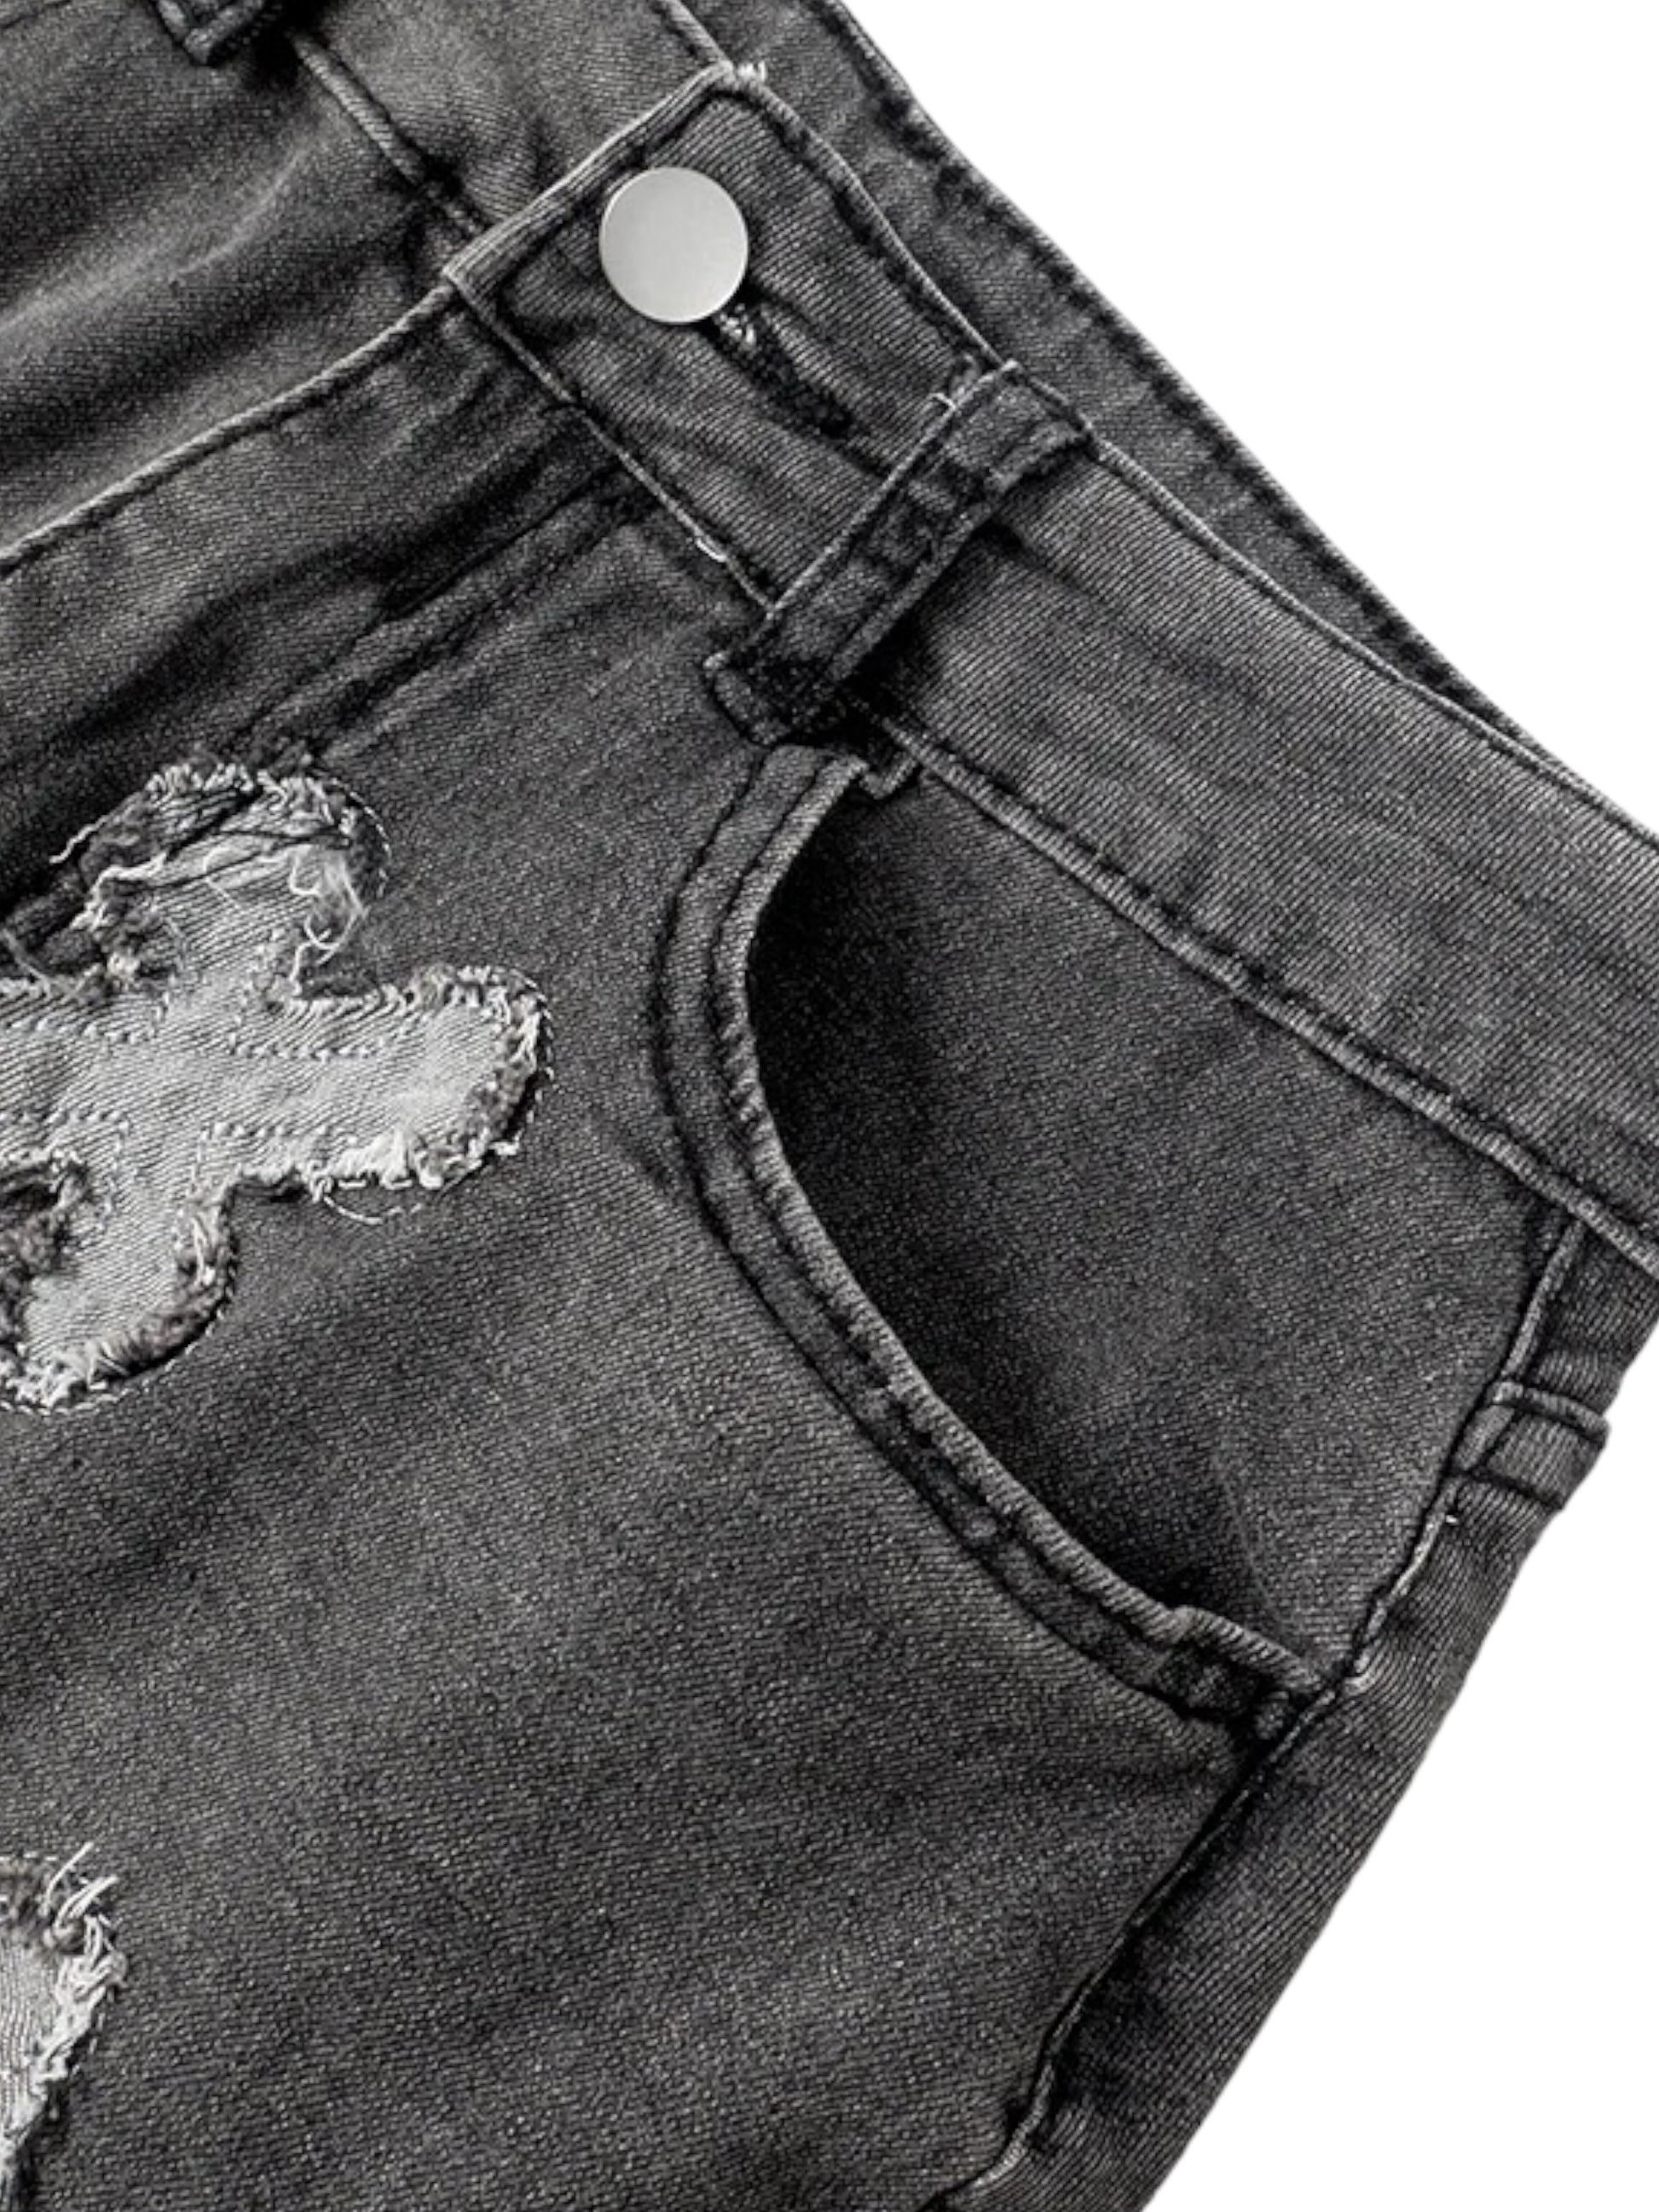 Close-up details of Denim Skirt